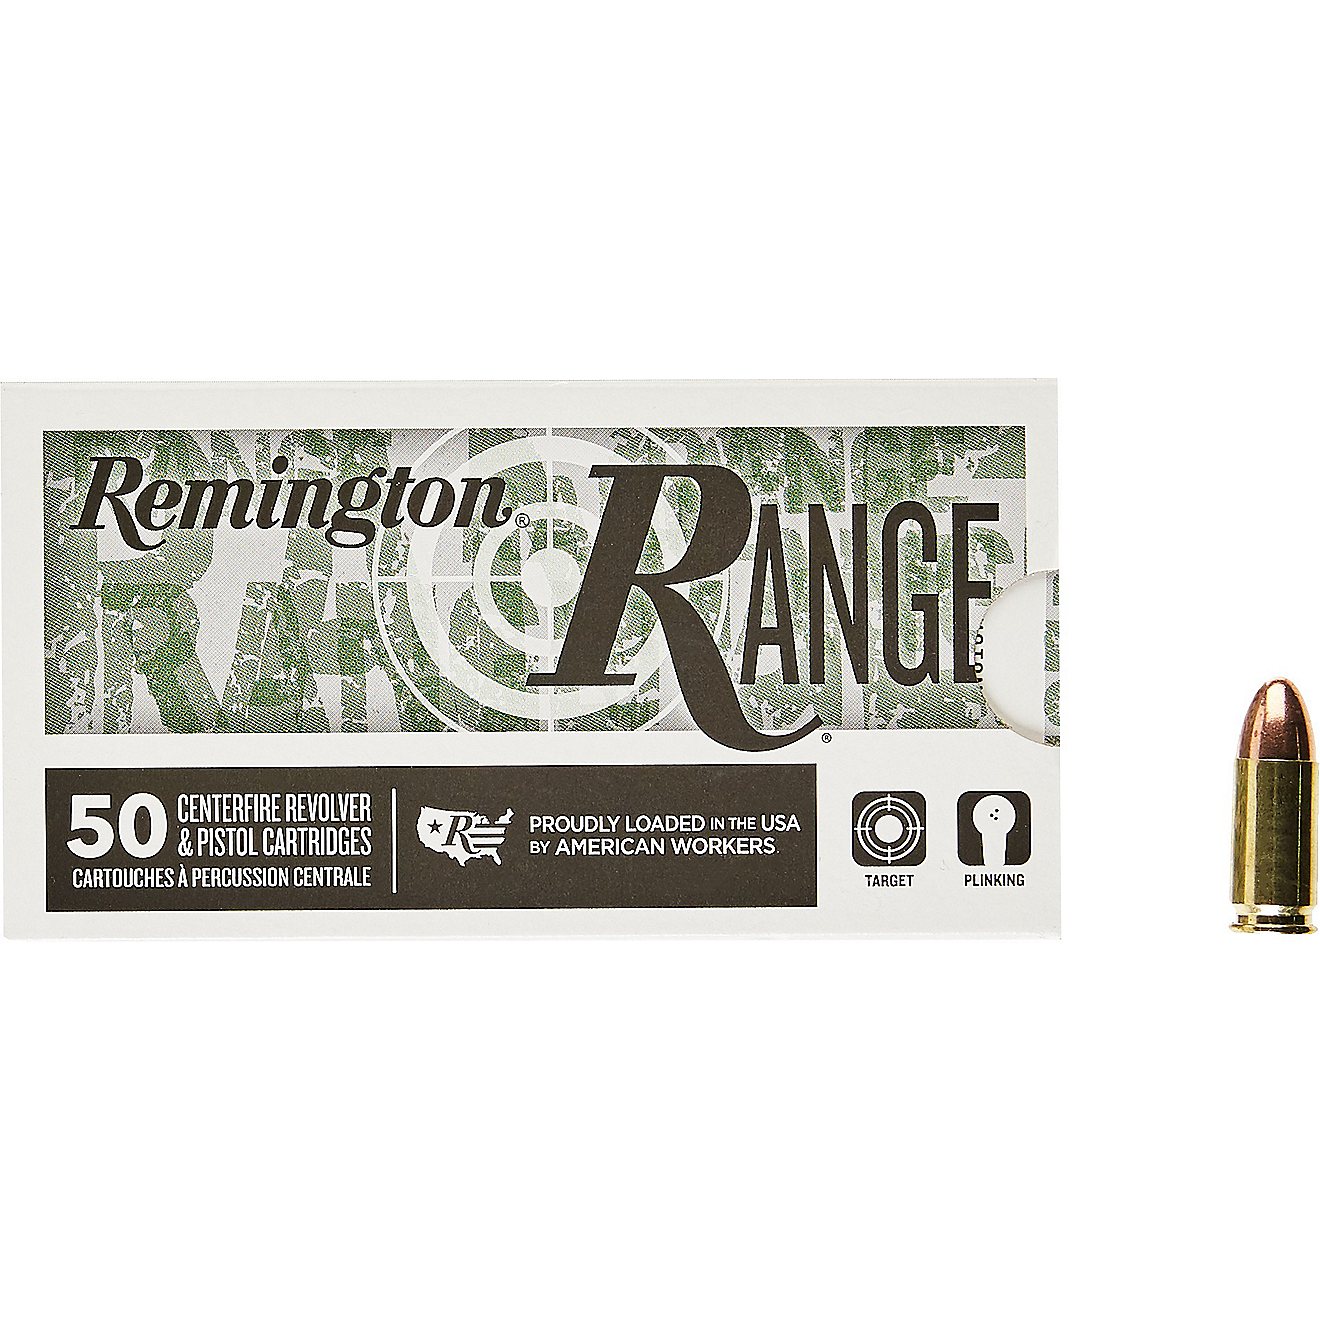 Remington Range 9mm Luger 115-Grain Centerfire Handgun Ammunition - 50 Rounds                                                    - view number 1